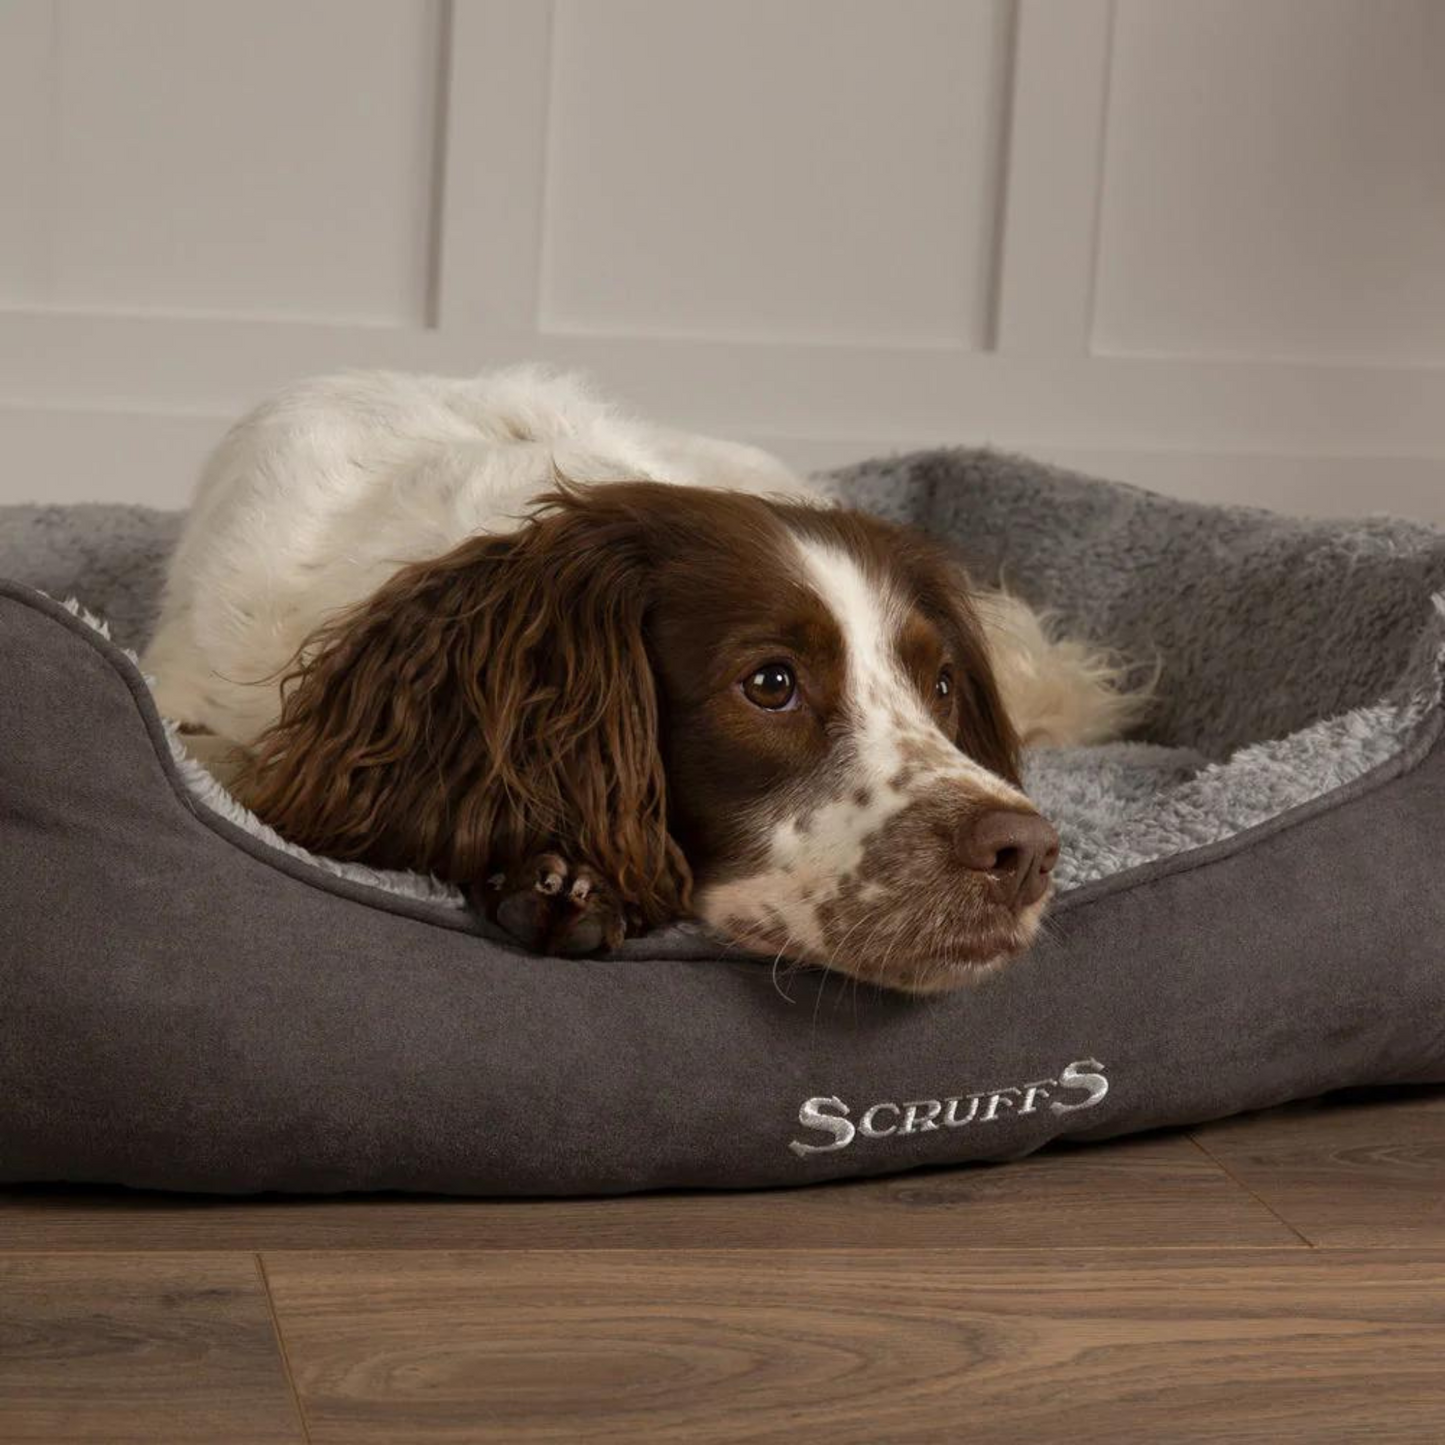 Scruffs Cosy Soft Walled Box Dog Bed Fully Machine Washable Grey Large & X Large